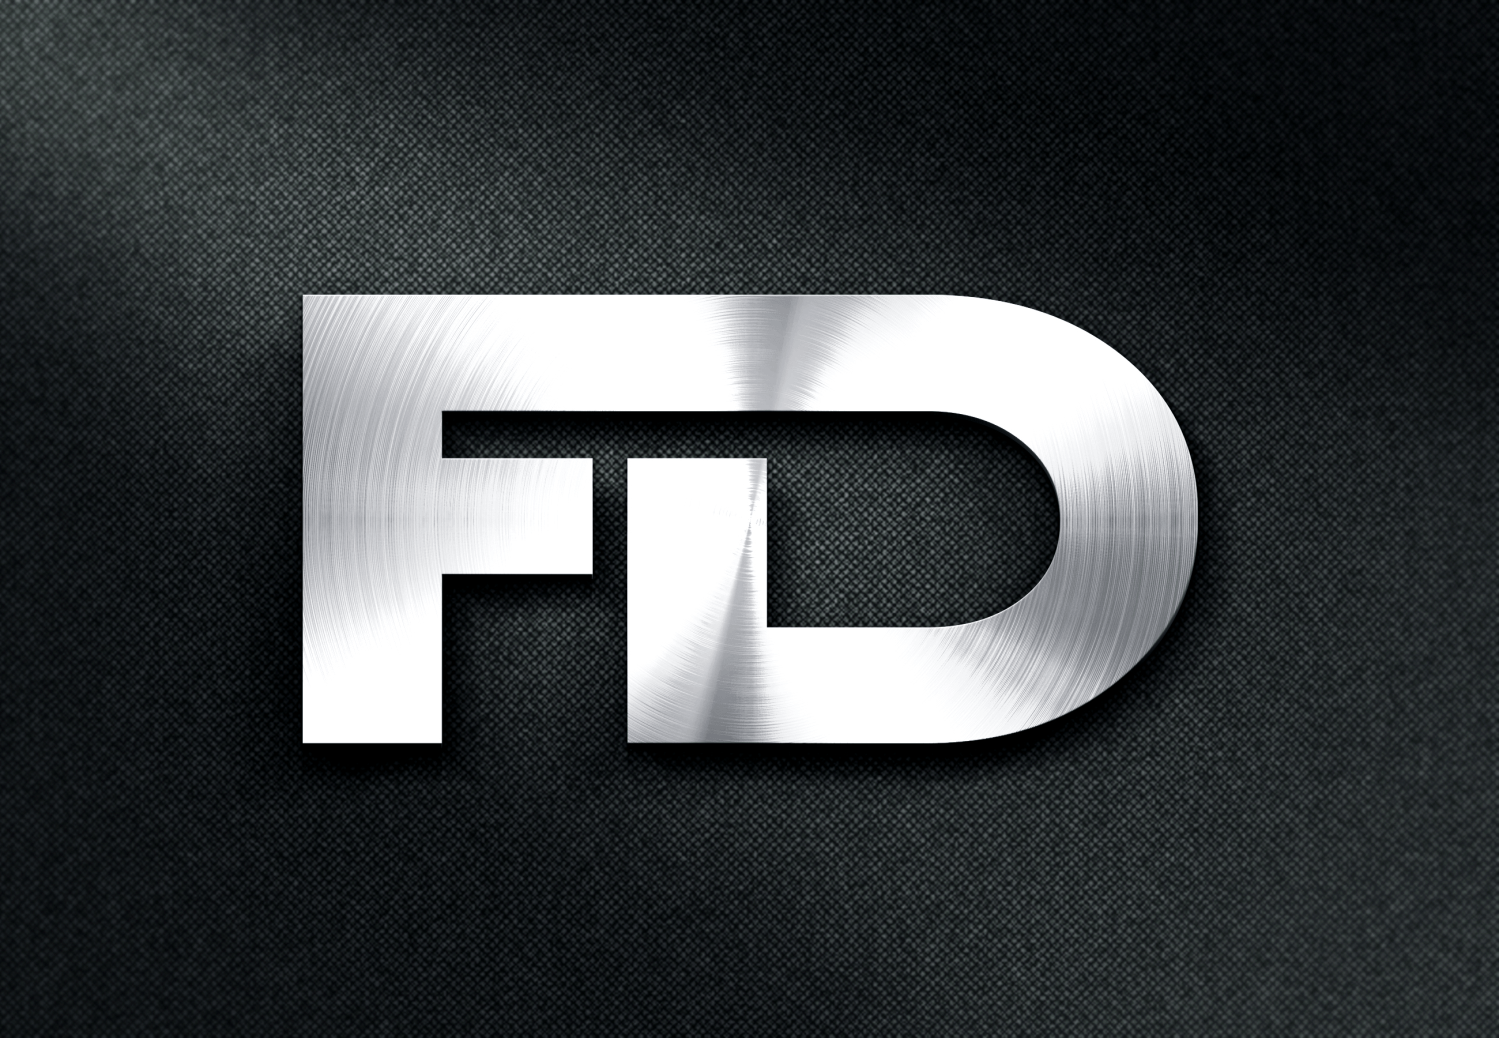 Fd Logo - Bold, Modern, Home Builder Logo Design for FD